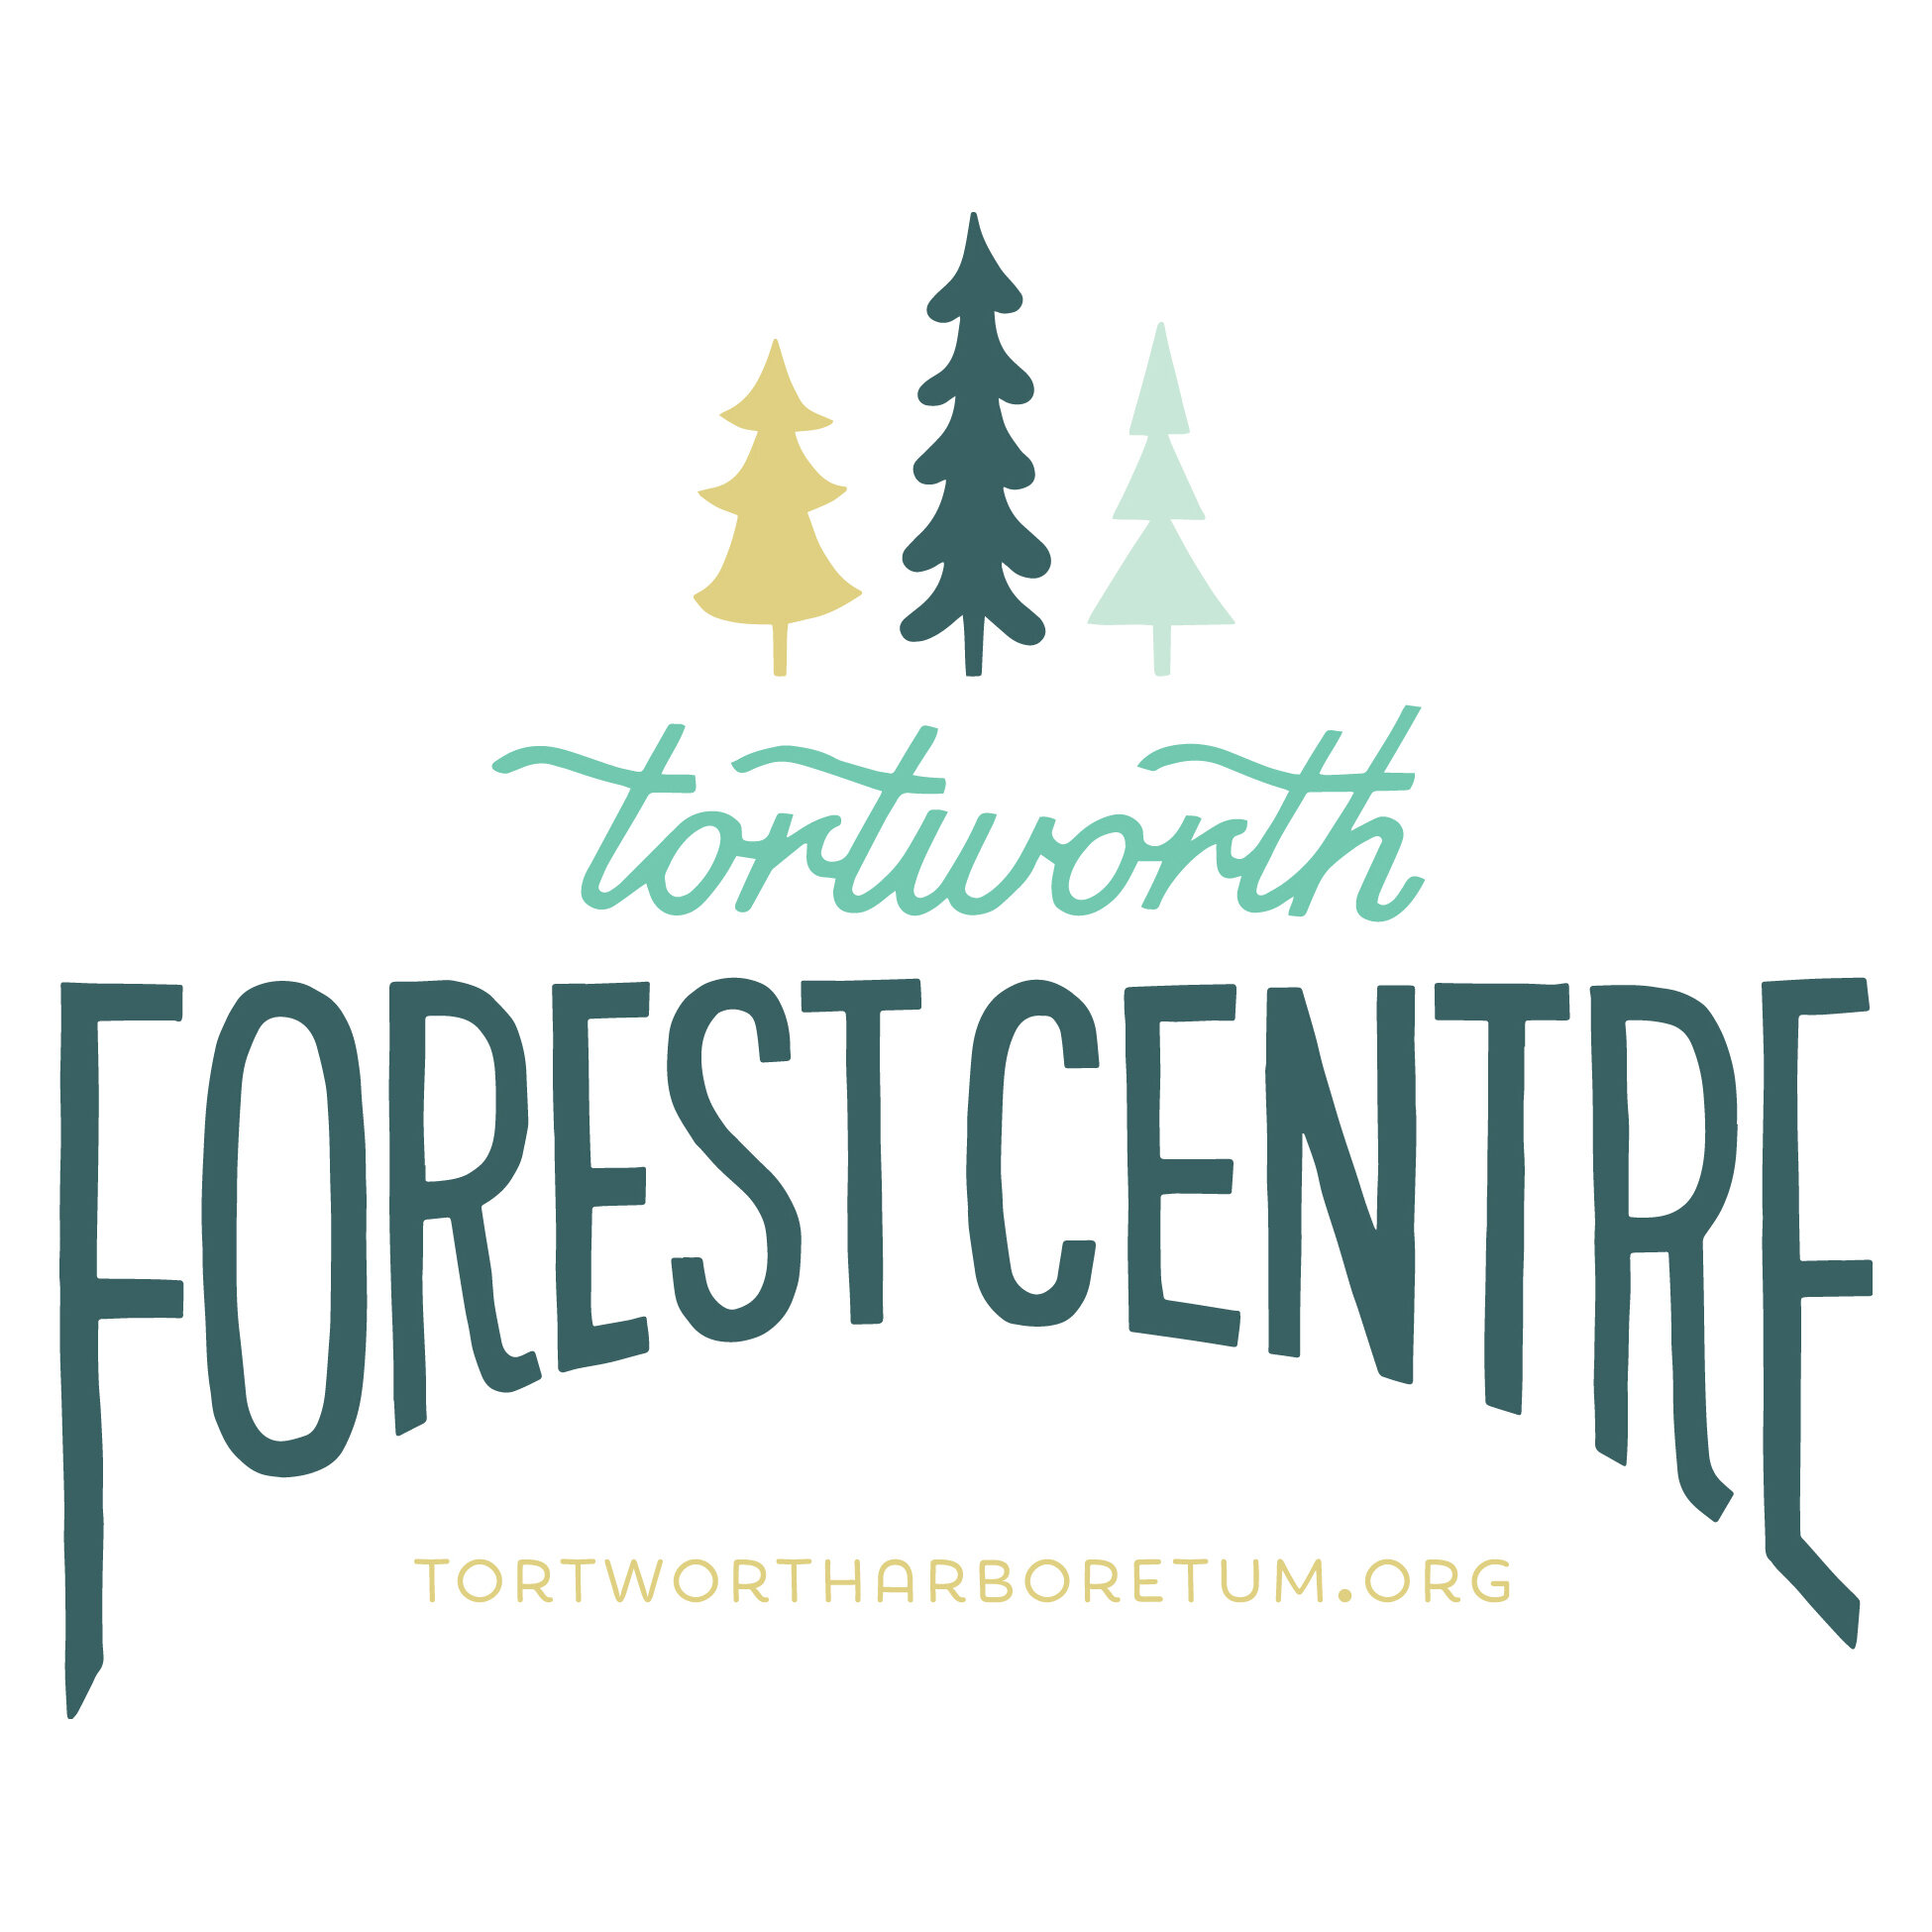 Tortworth-Forest-hi-square.jpeg